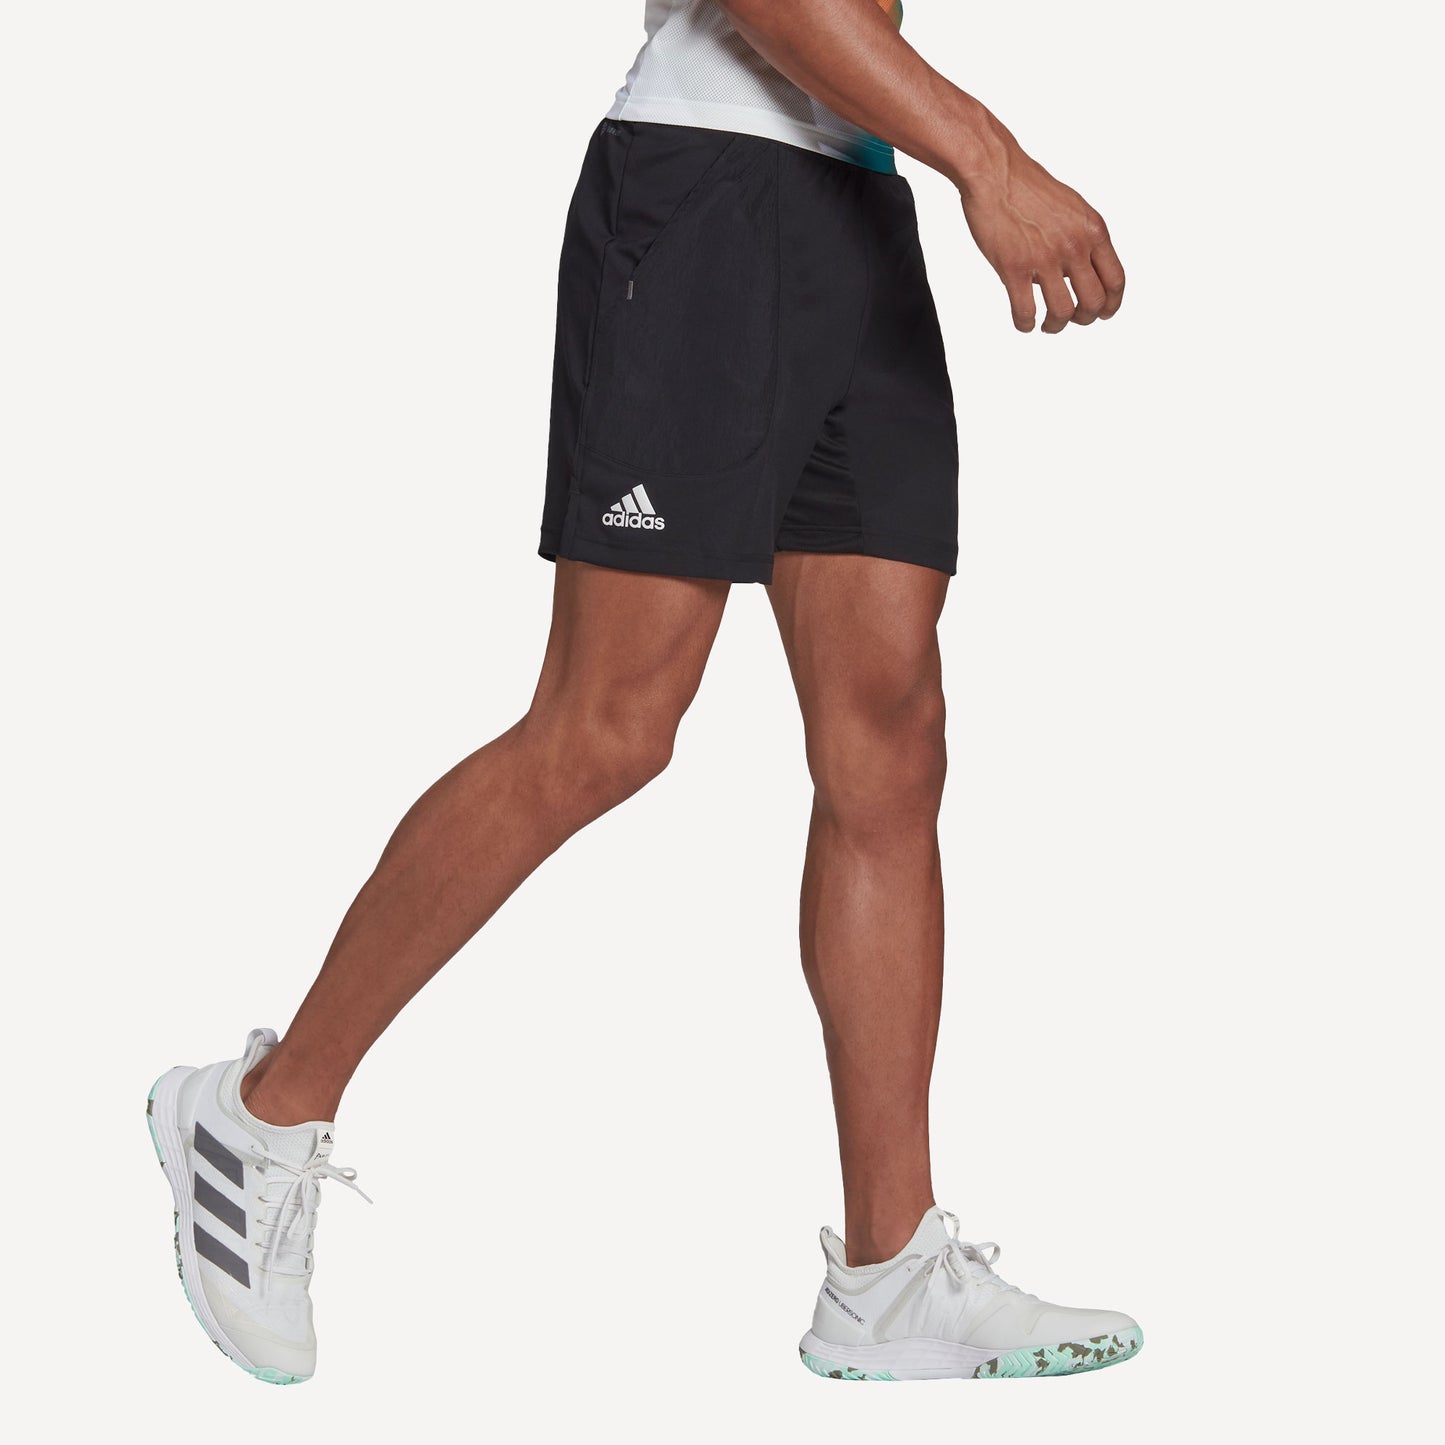 adidas Melbourne Men's 7-Inch Tennis Shorts Black (3)